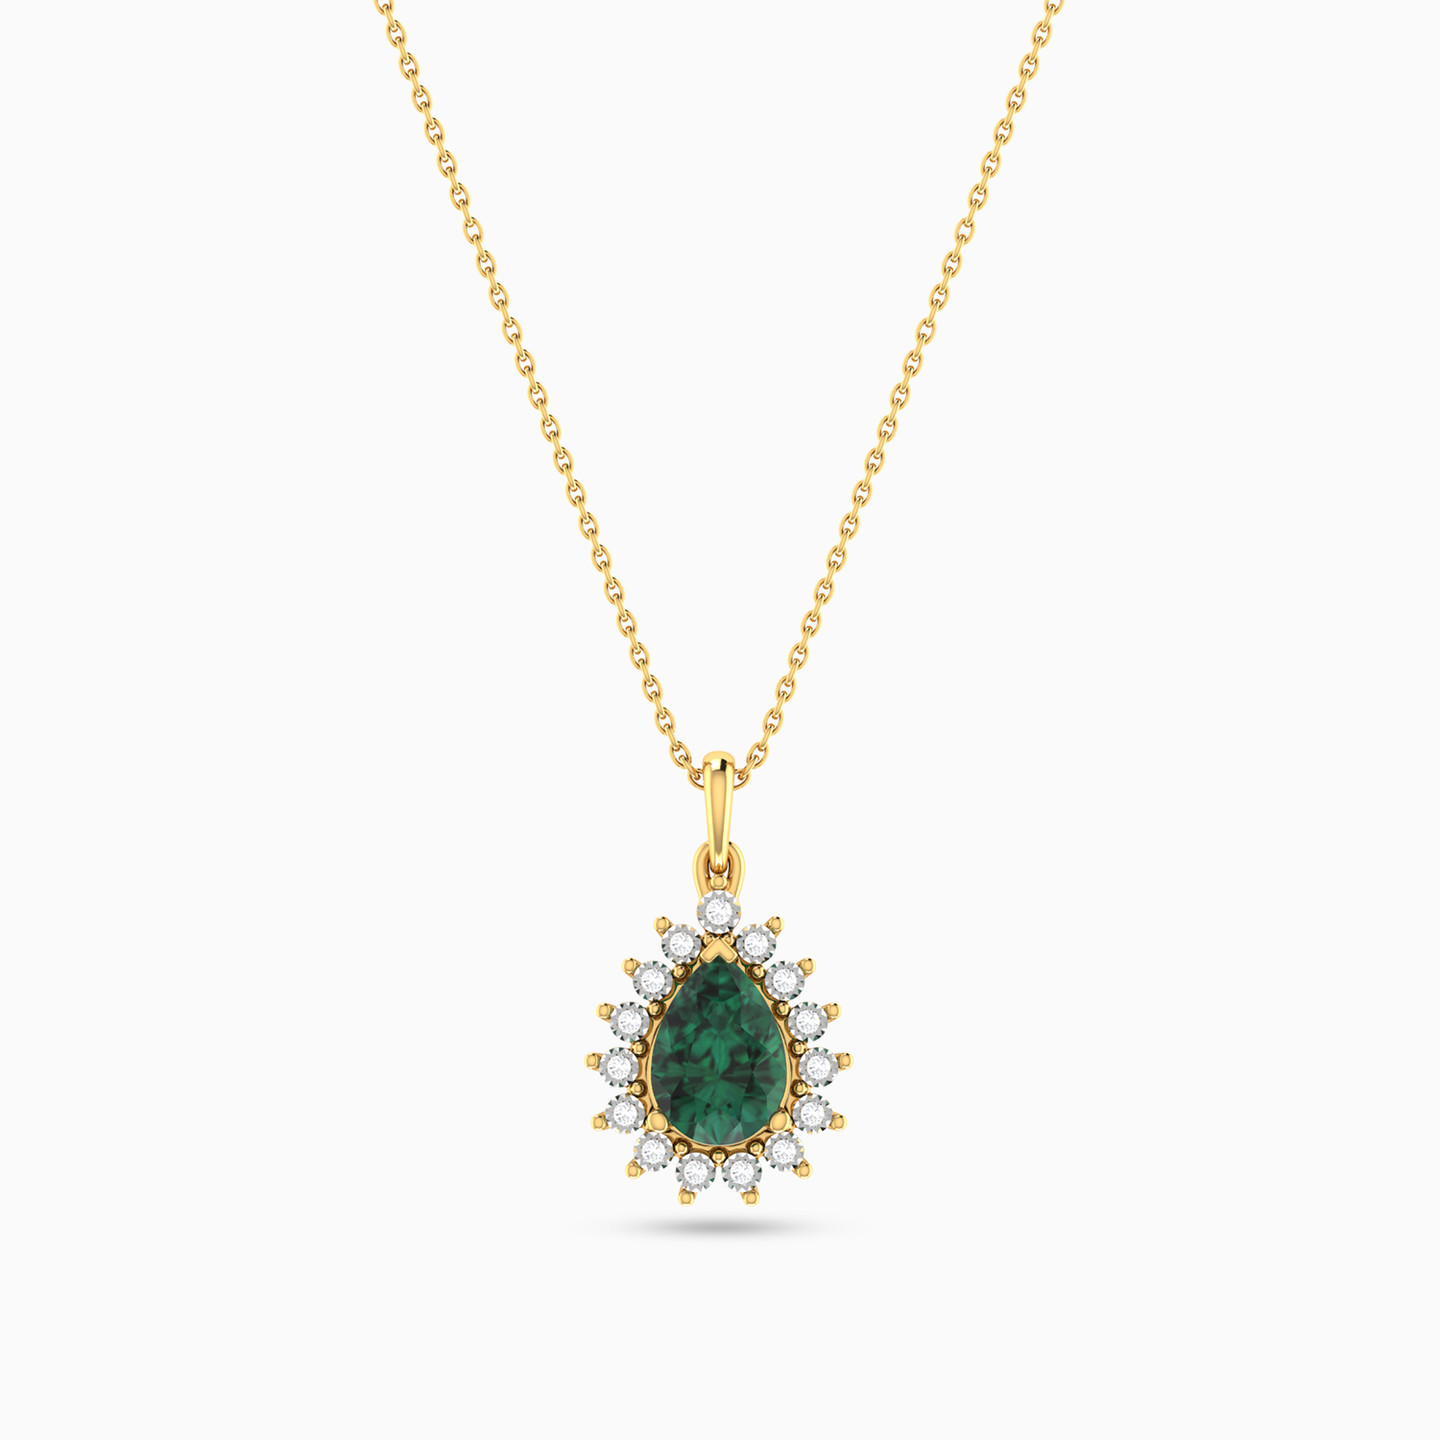 18K Gold Diamond & Colored Stones Pendant Necklace